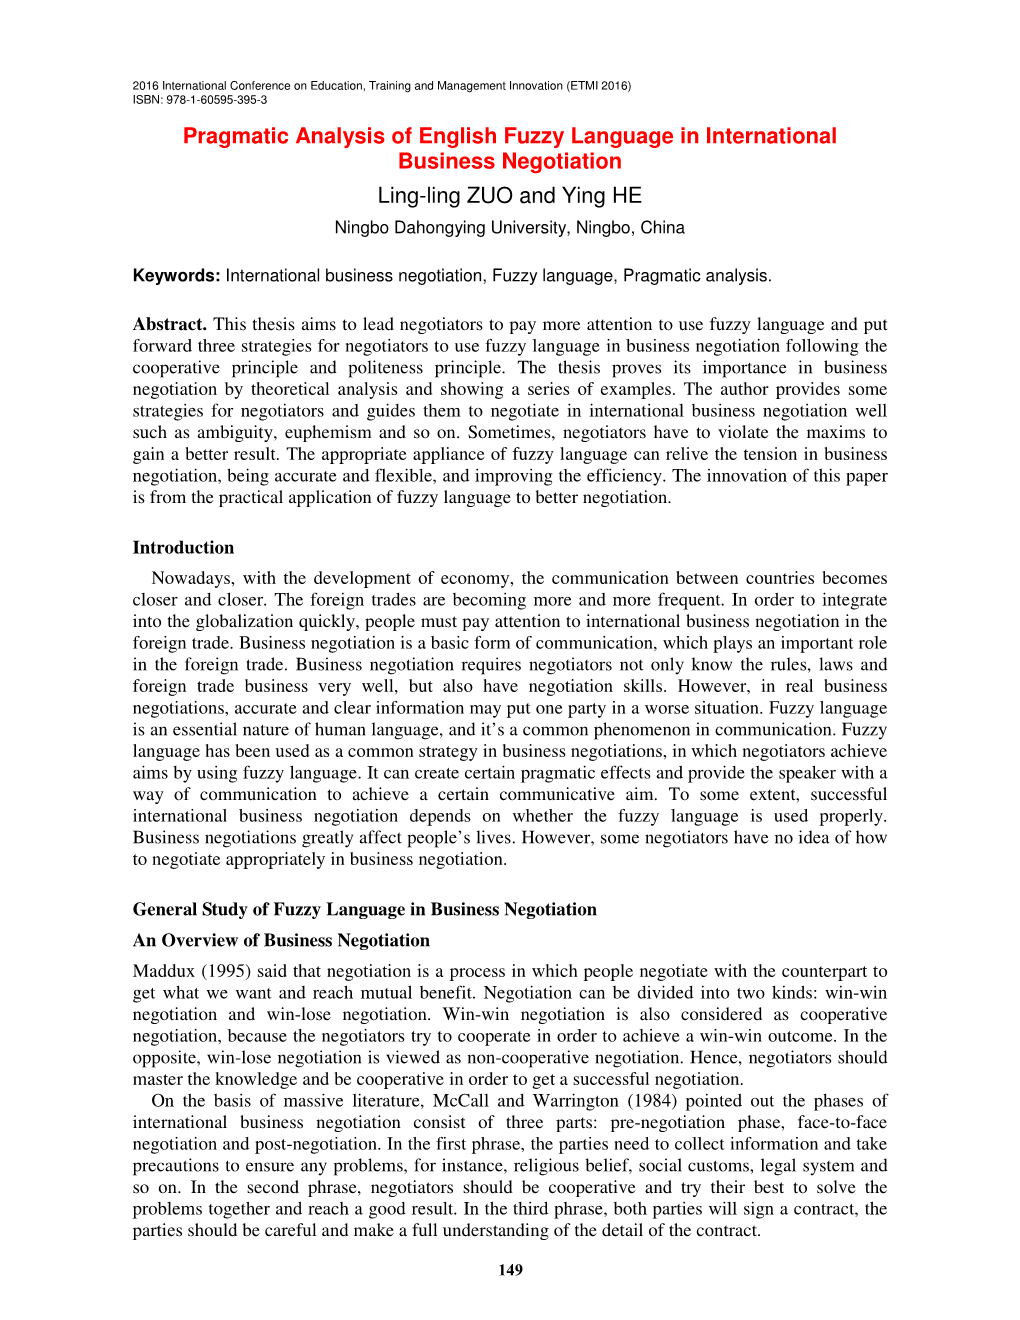 Pragmatic Analysis of English Fuzzy Language in International Business Negotiation Ling-Ling ZUO and Ying HE Ningbo Dahongying University, Ningbo, China